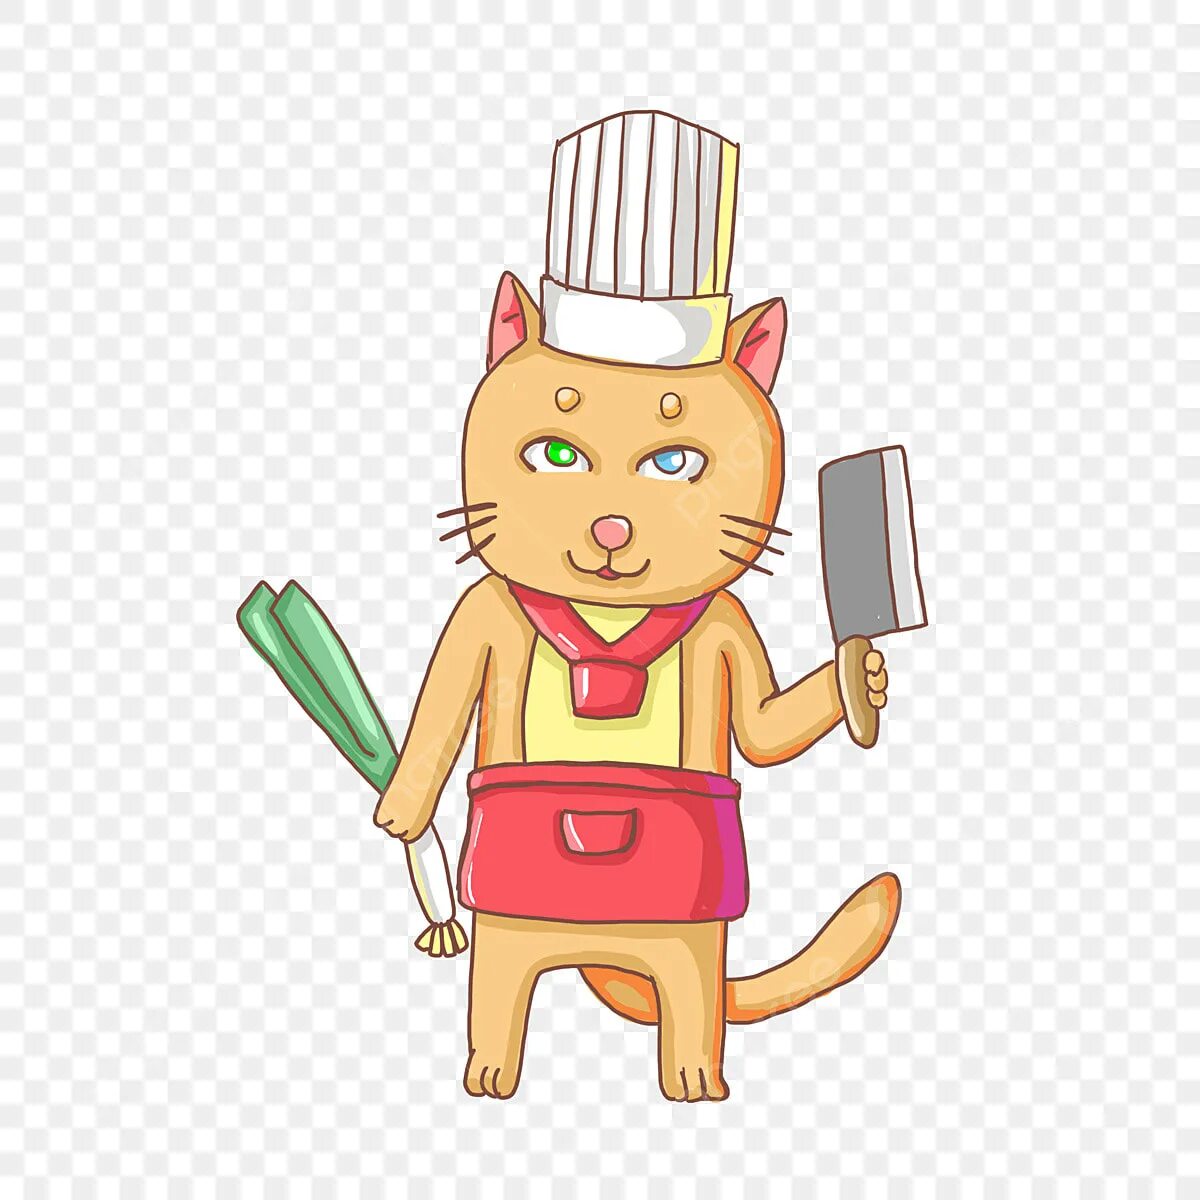 3 кота повар. Котик повар. Мультяшный котенок повар. Мультяшные кошки повара. Рисованный котик повар.